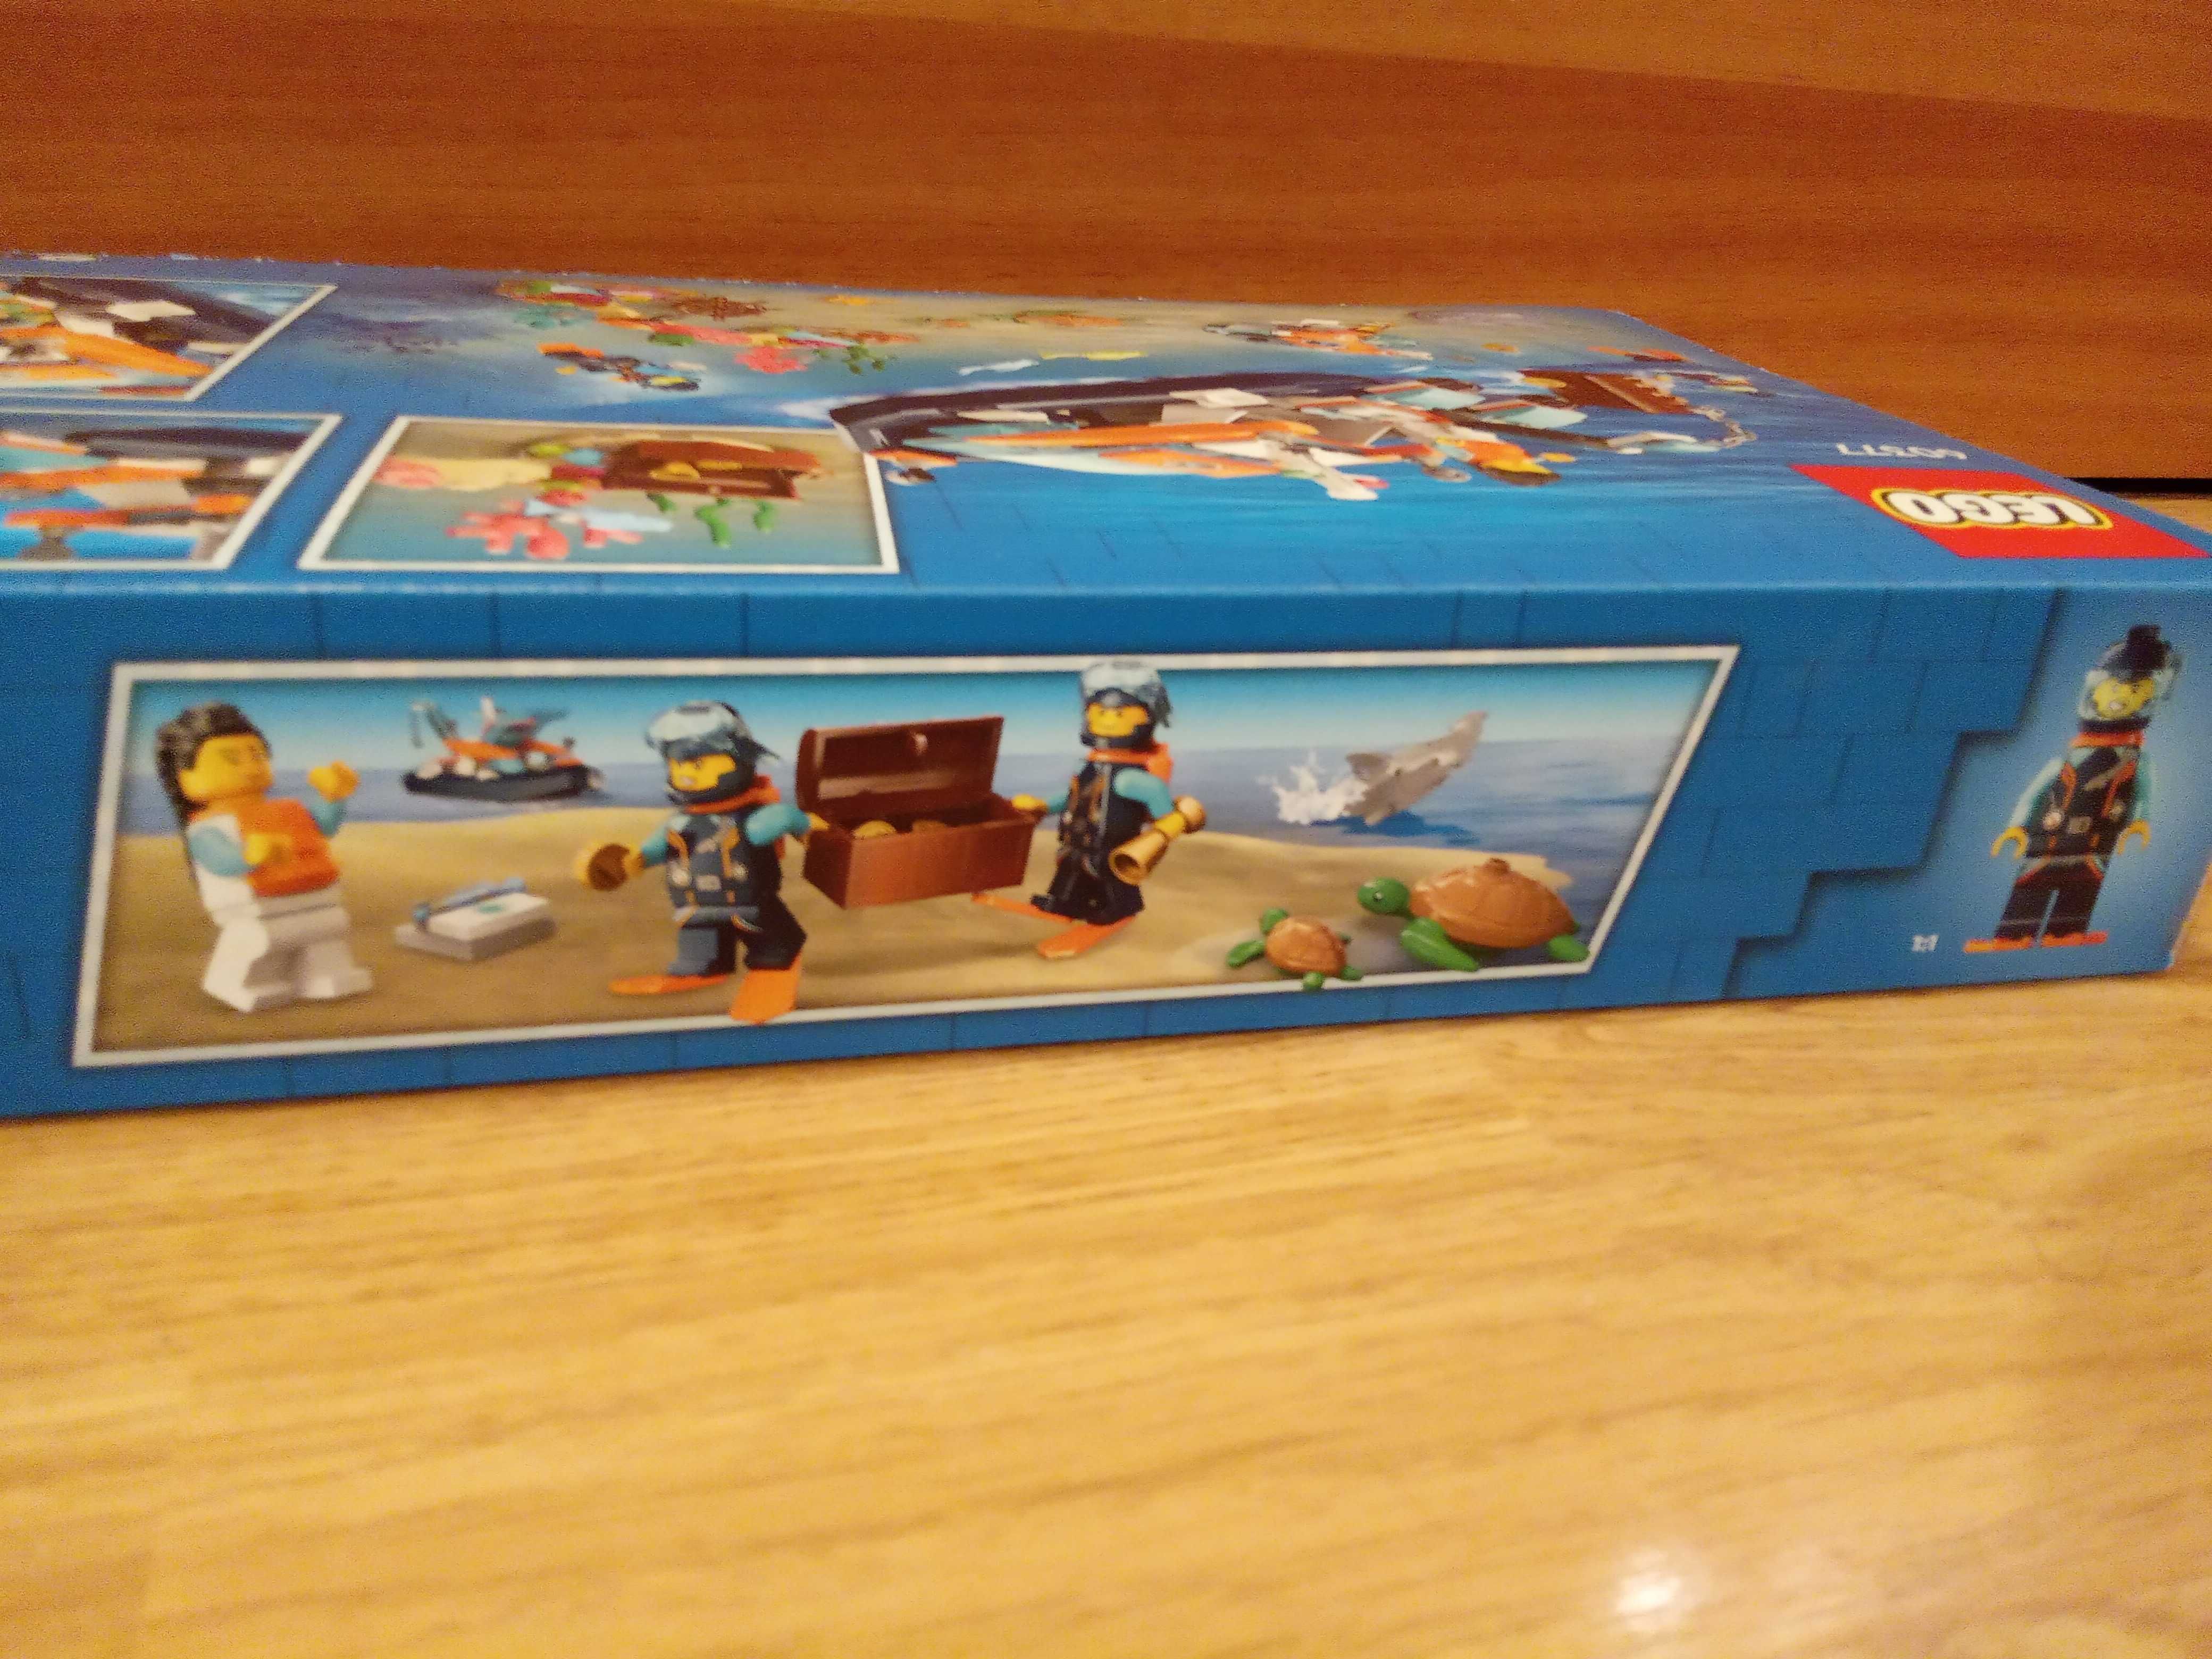 Lego 60377 barca pentru scufundari nou, sigilat